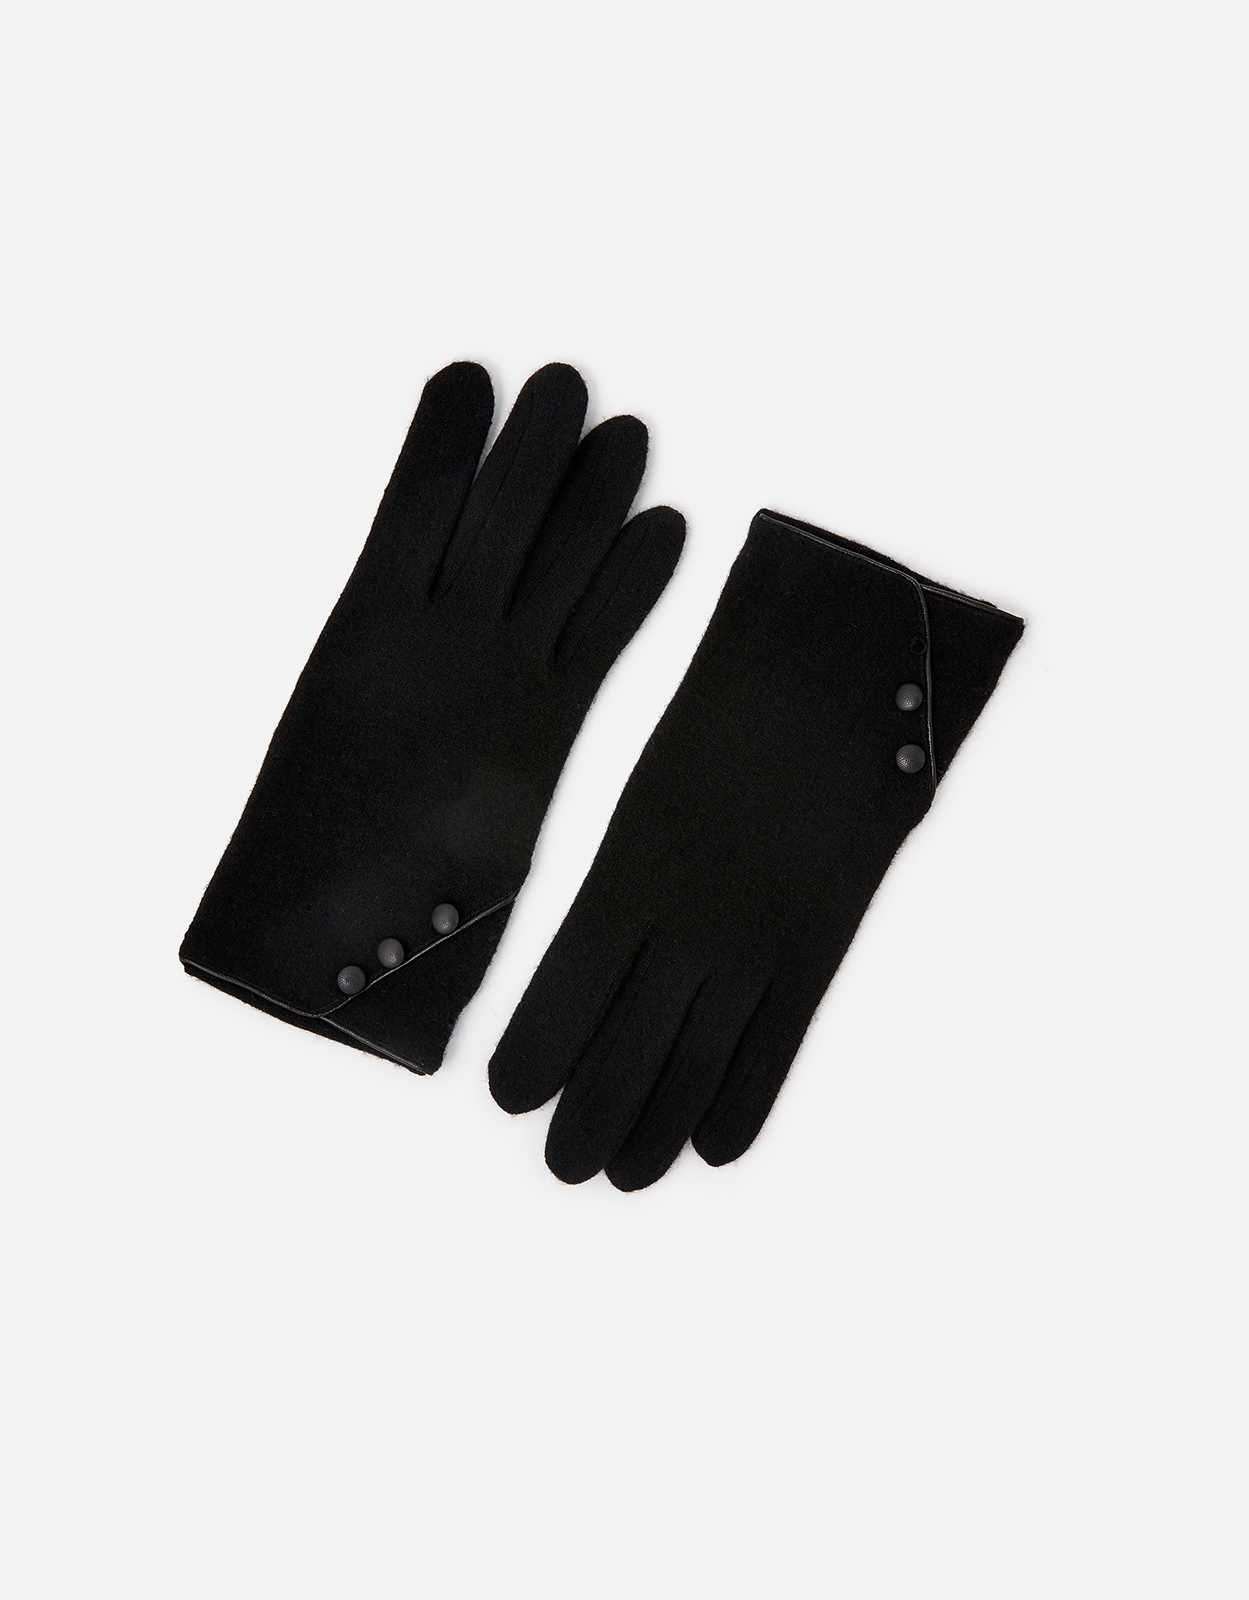 Accessorize Women's Black Wool Button Detail Gloves, Size: M / L